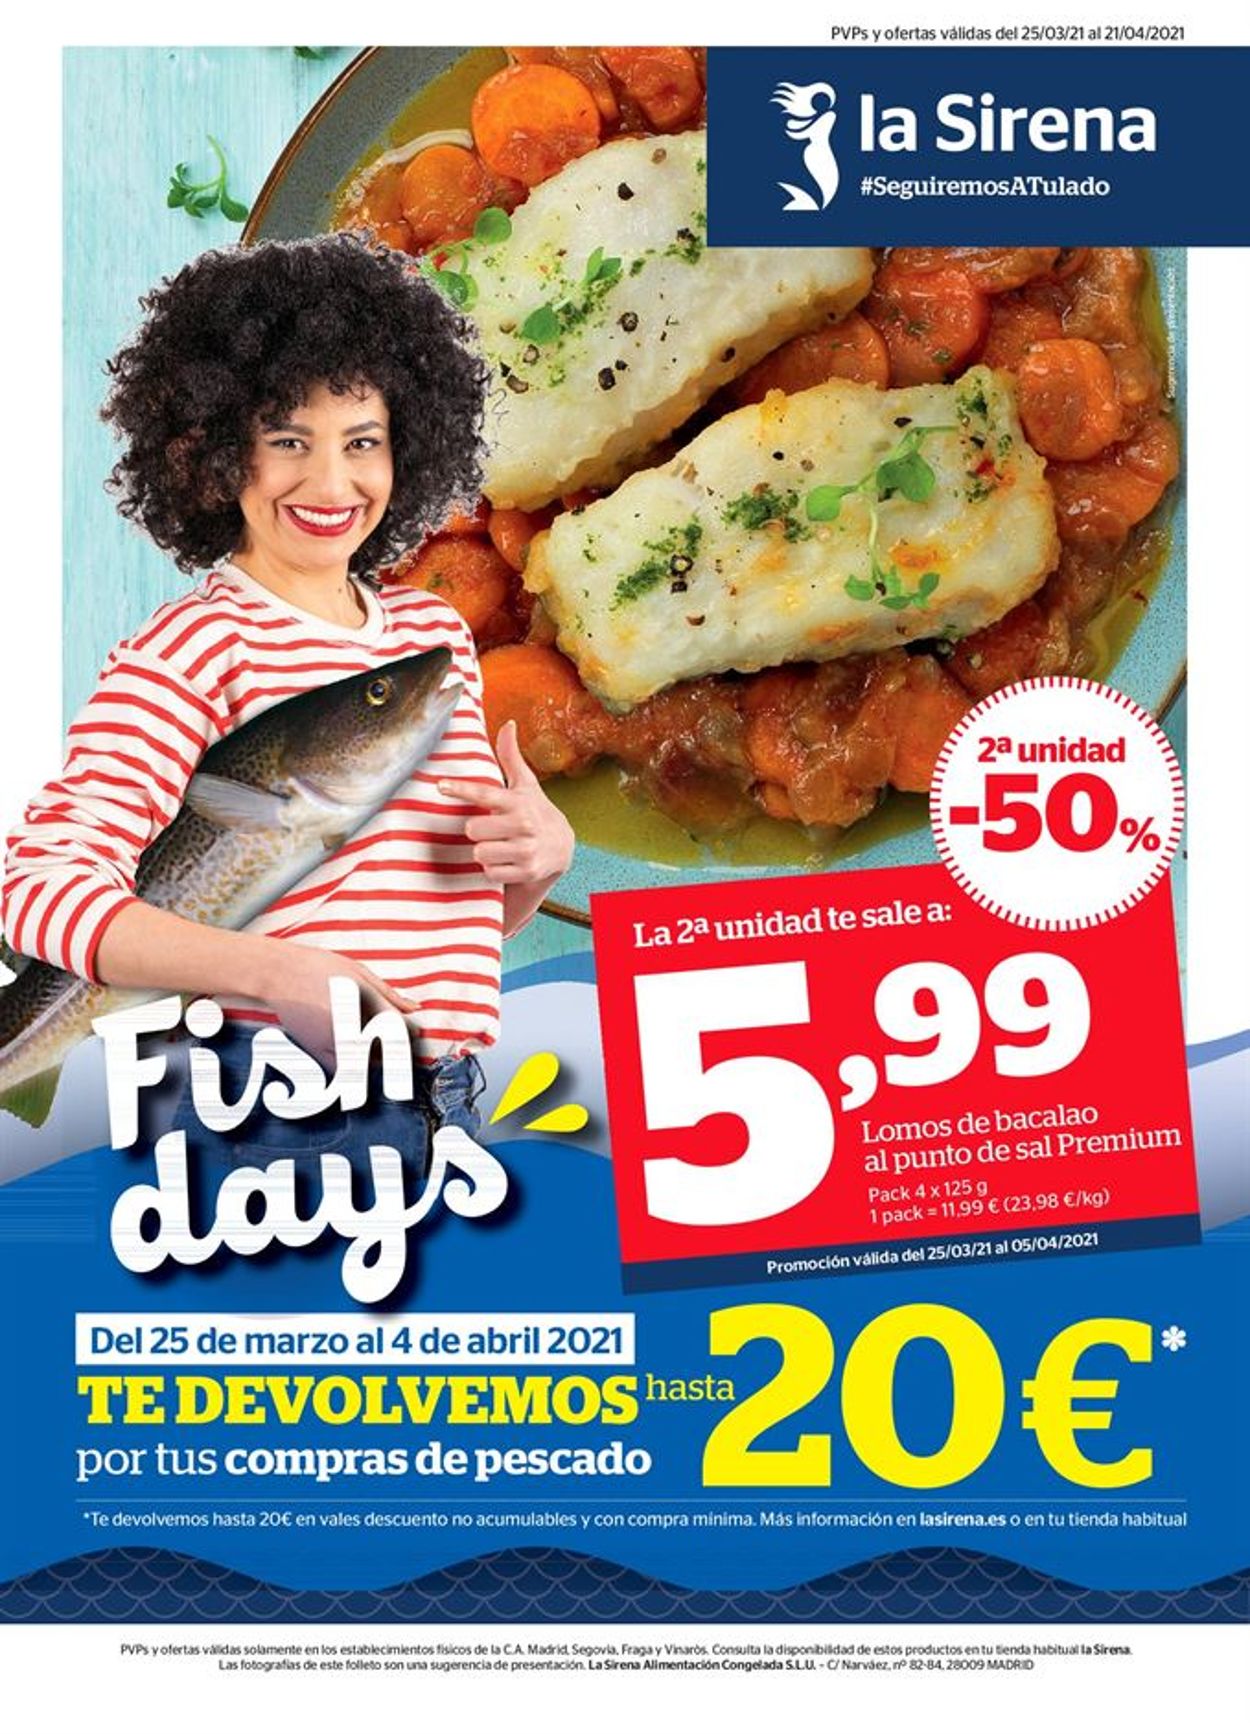 La Sirena Fish days Folleto - 25.03-21.04.2021